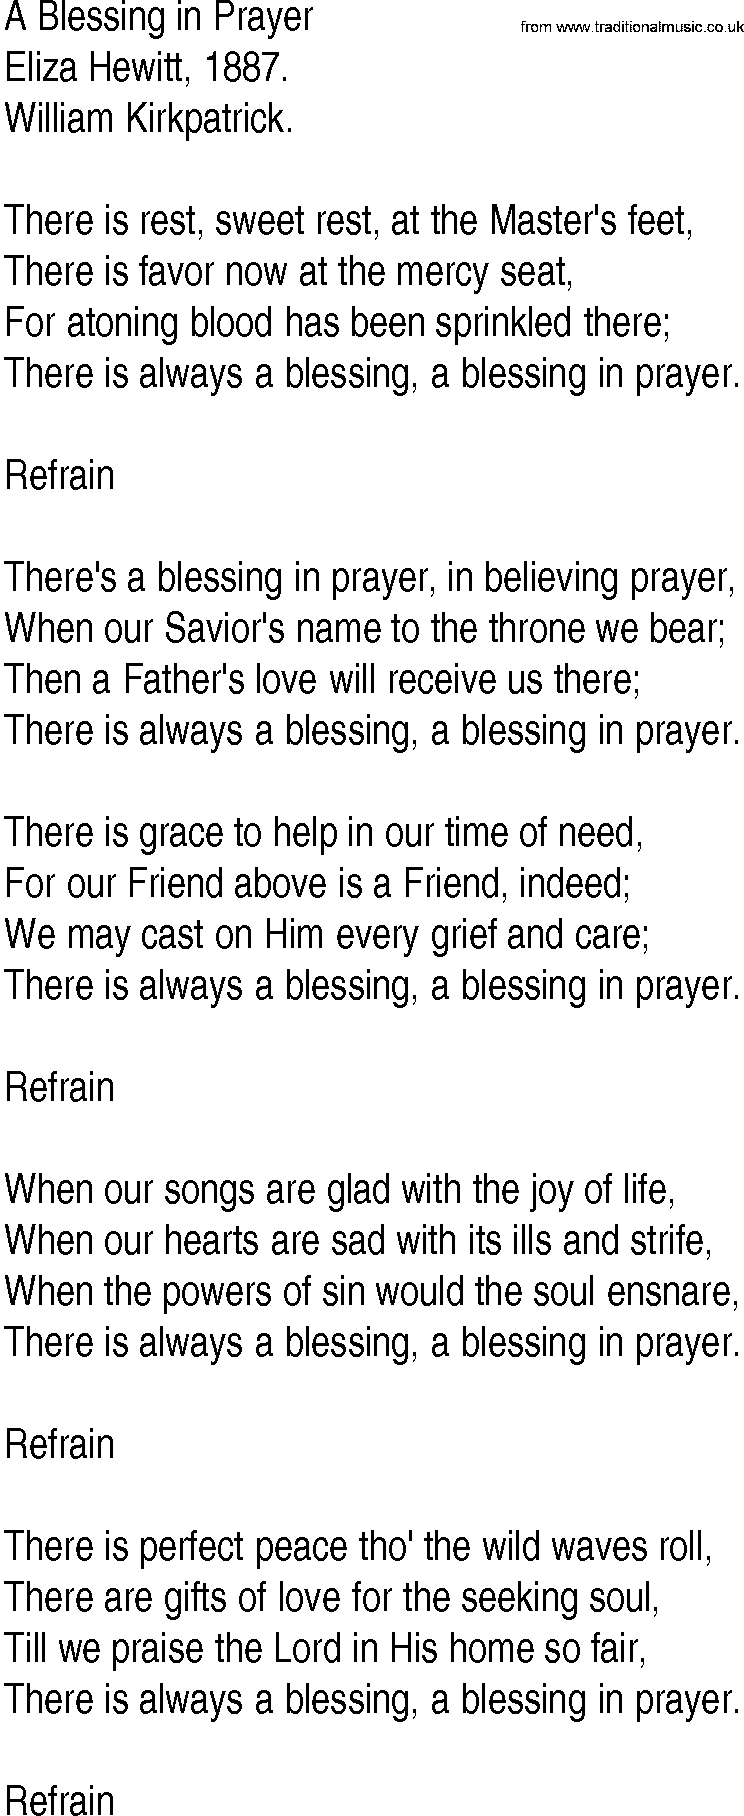 Hymn and Gospel Song: A Blessing in Prayer by Eliza Hewitt lyrics